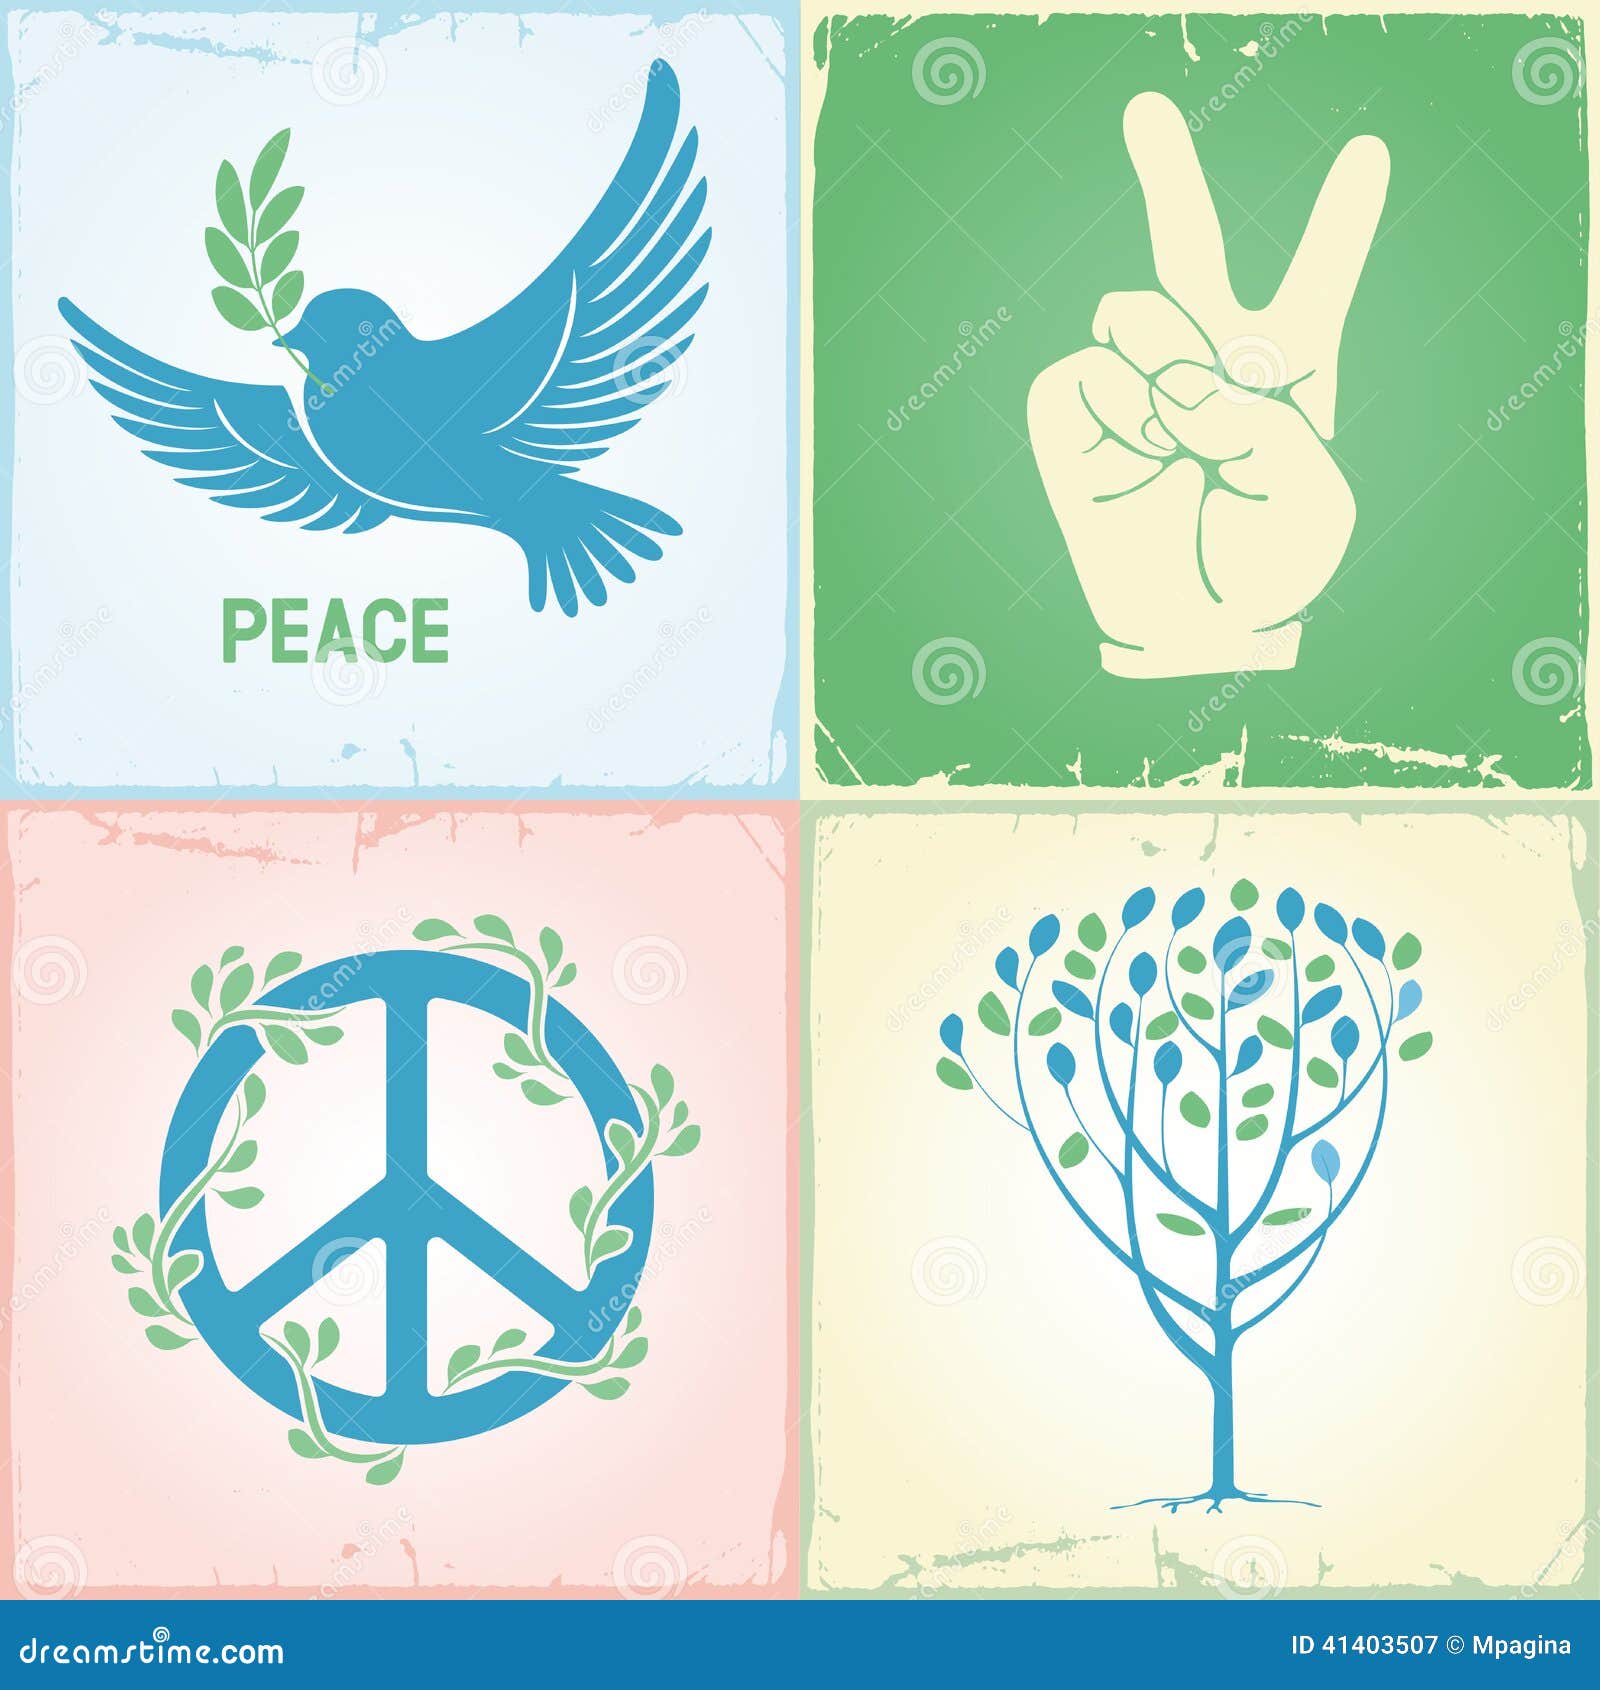 Символ слова мир. Мир согласие символ.